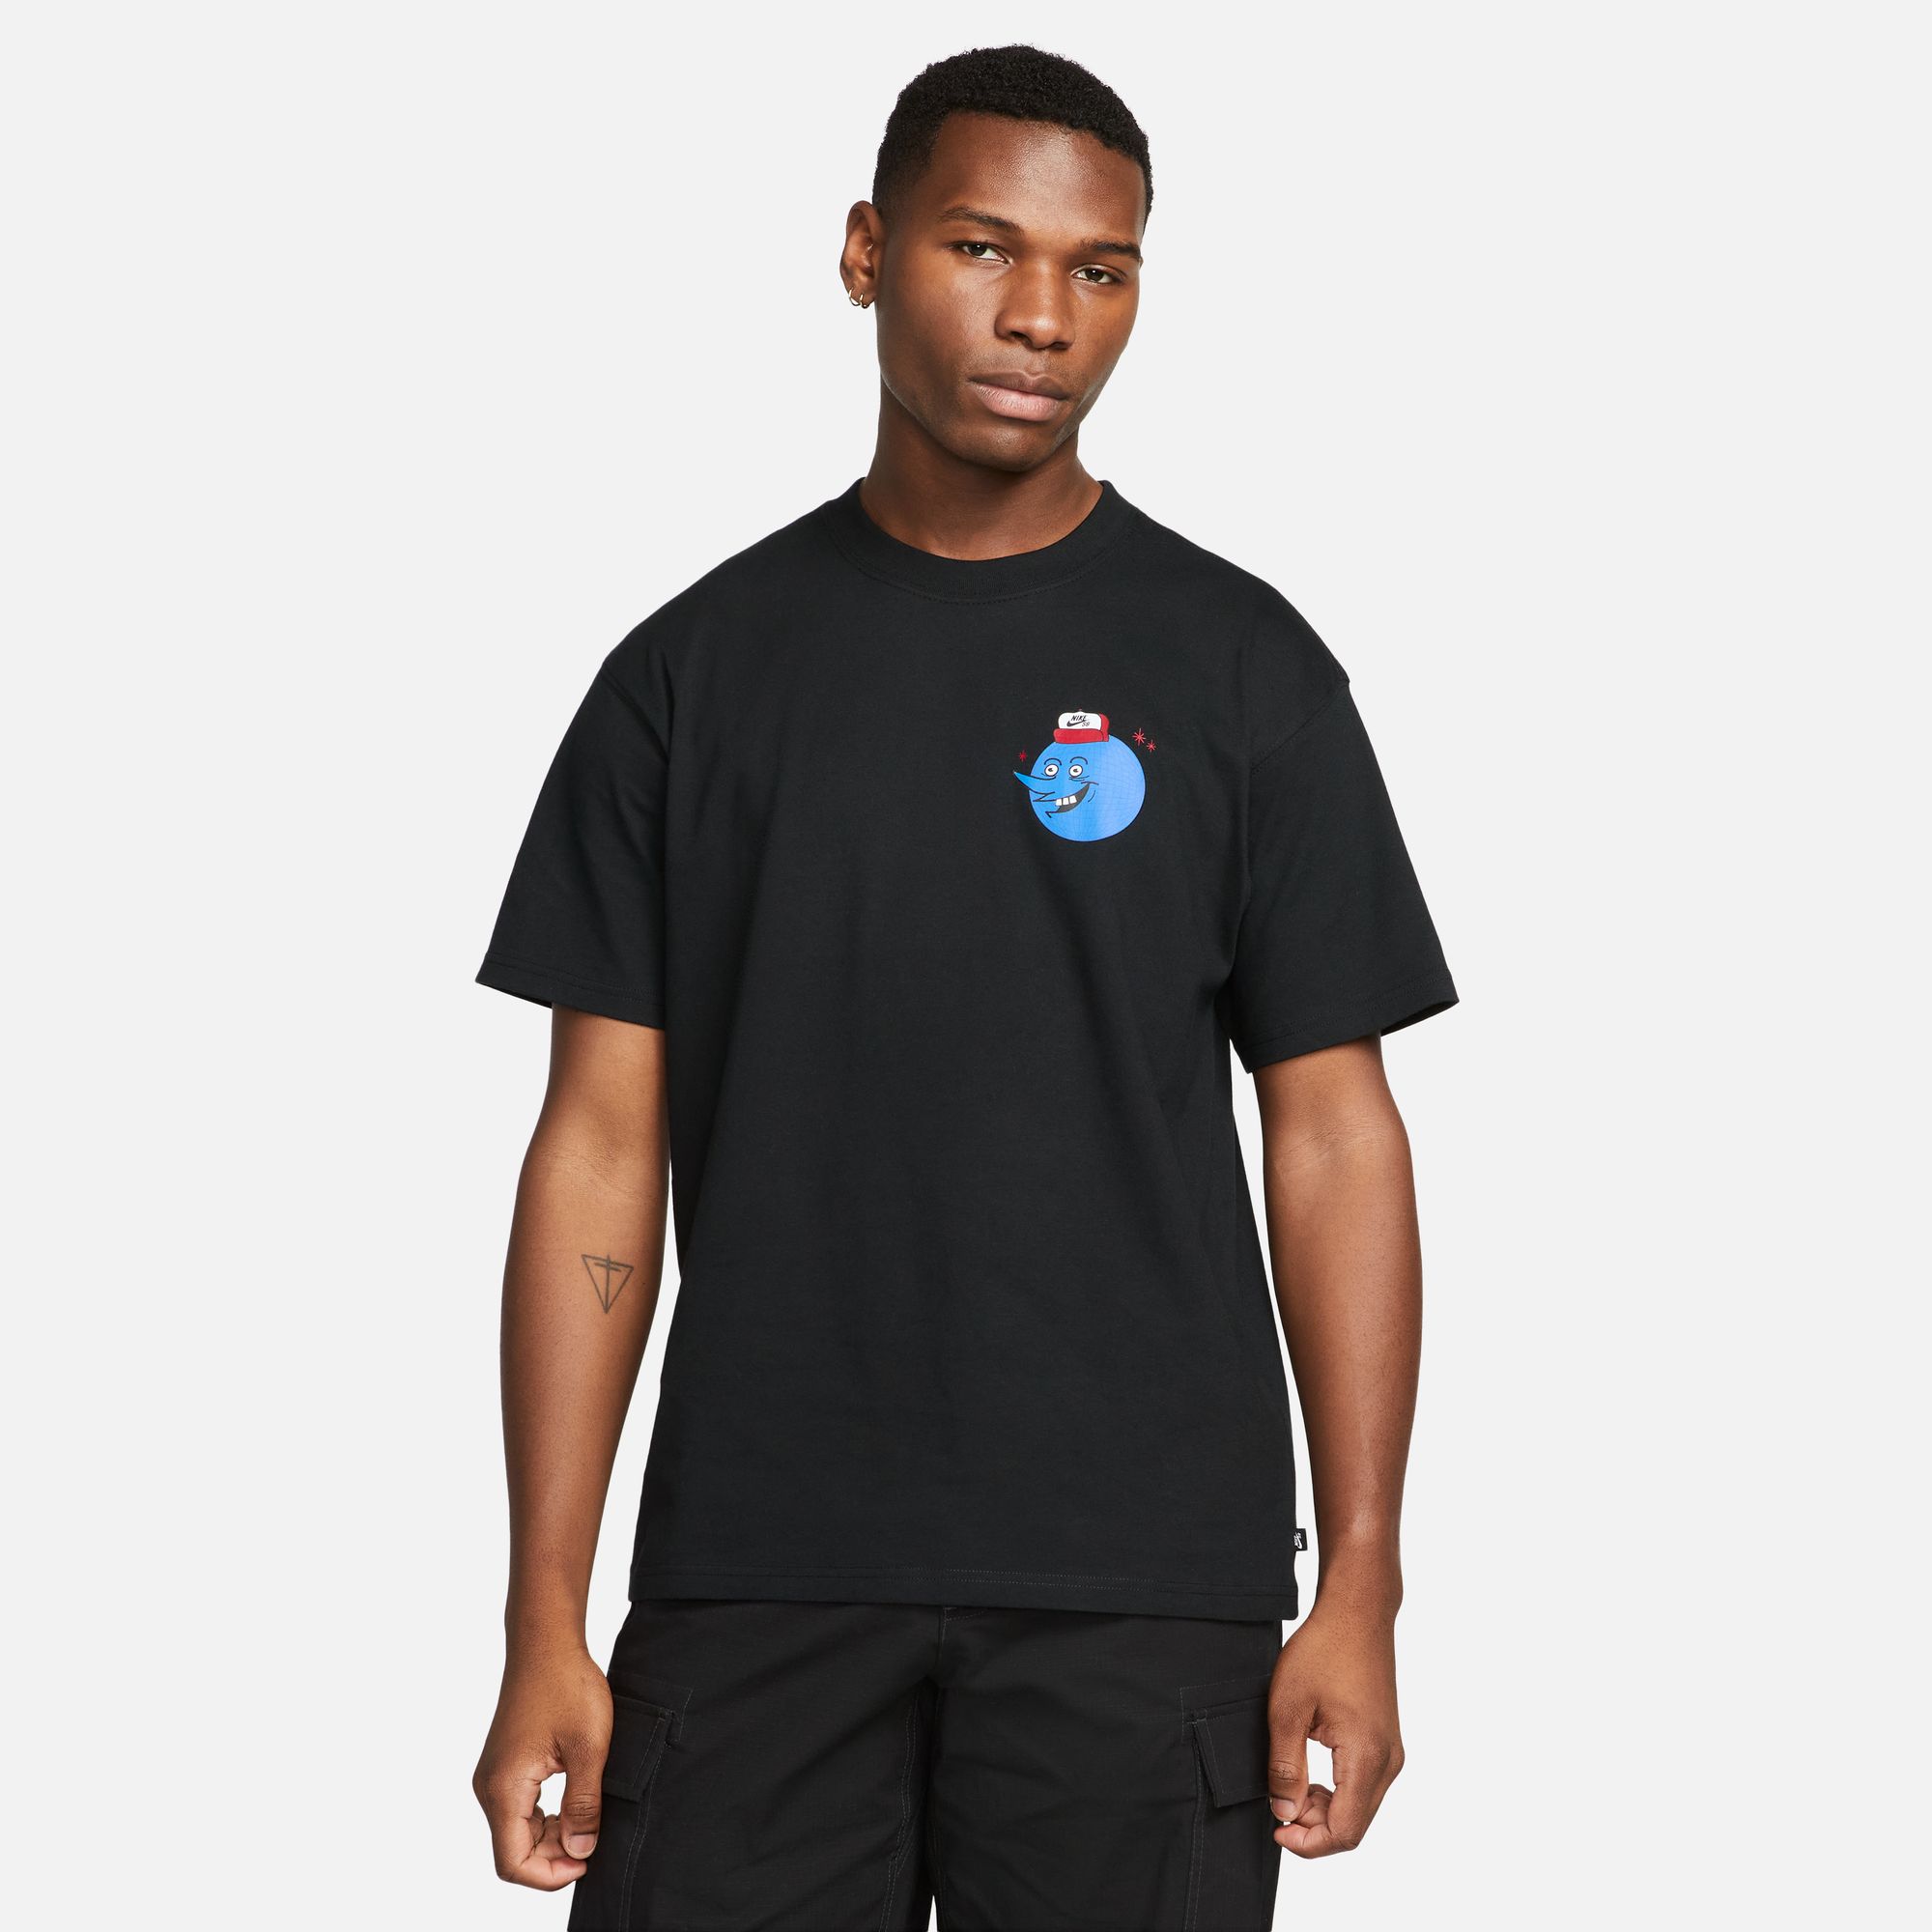 Nike SB Men's Skate T-Shirt Just Be Here Black 03